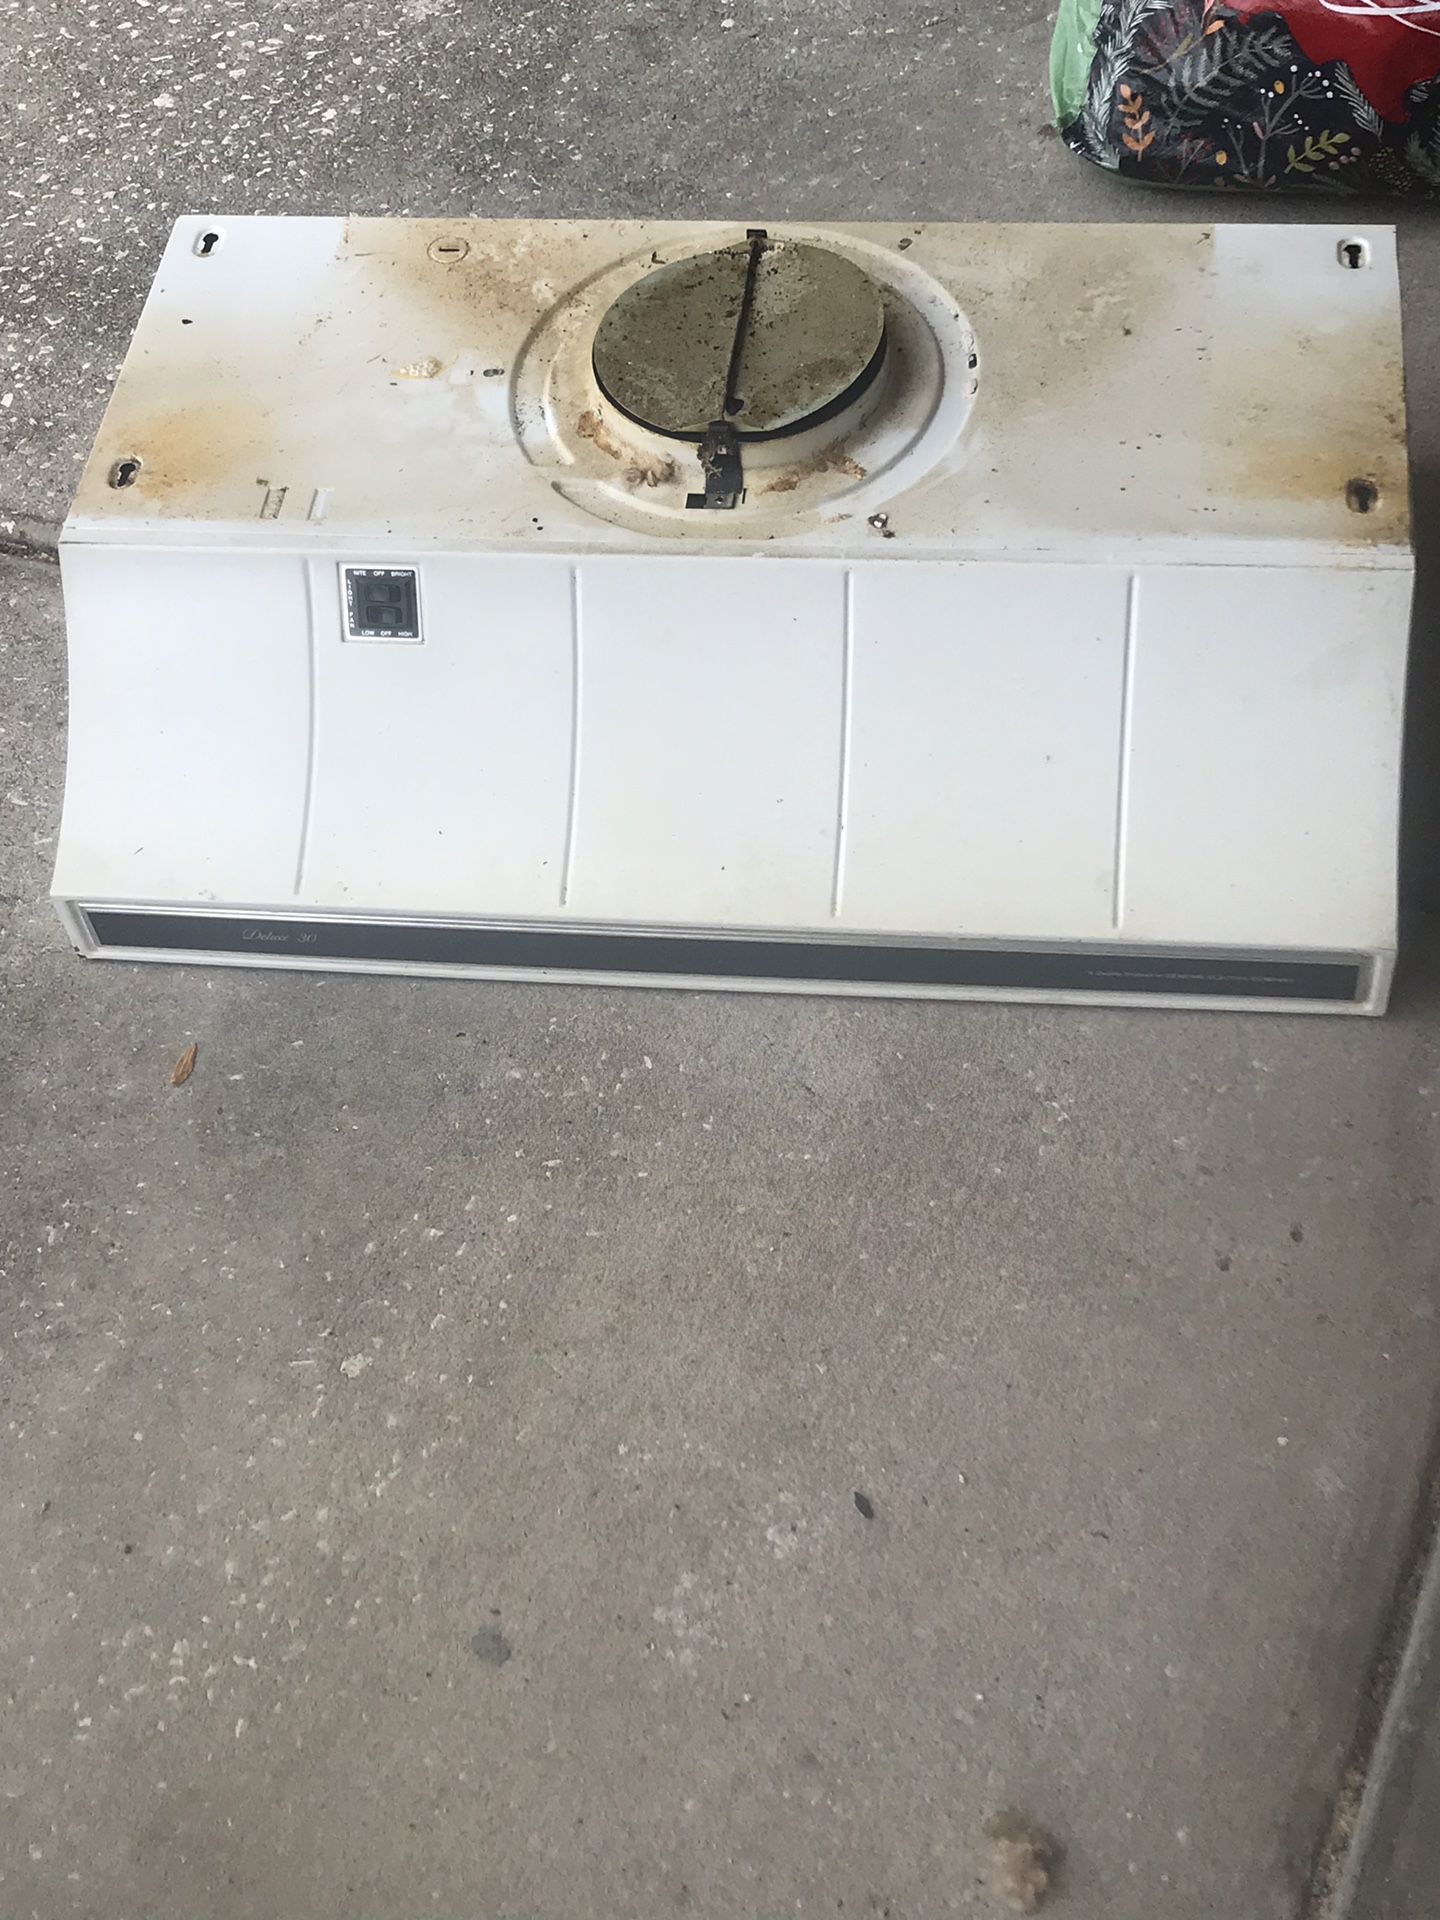 Free kitchen air vent